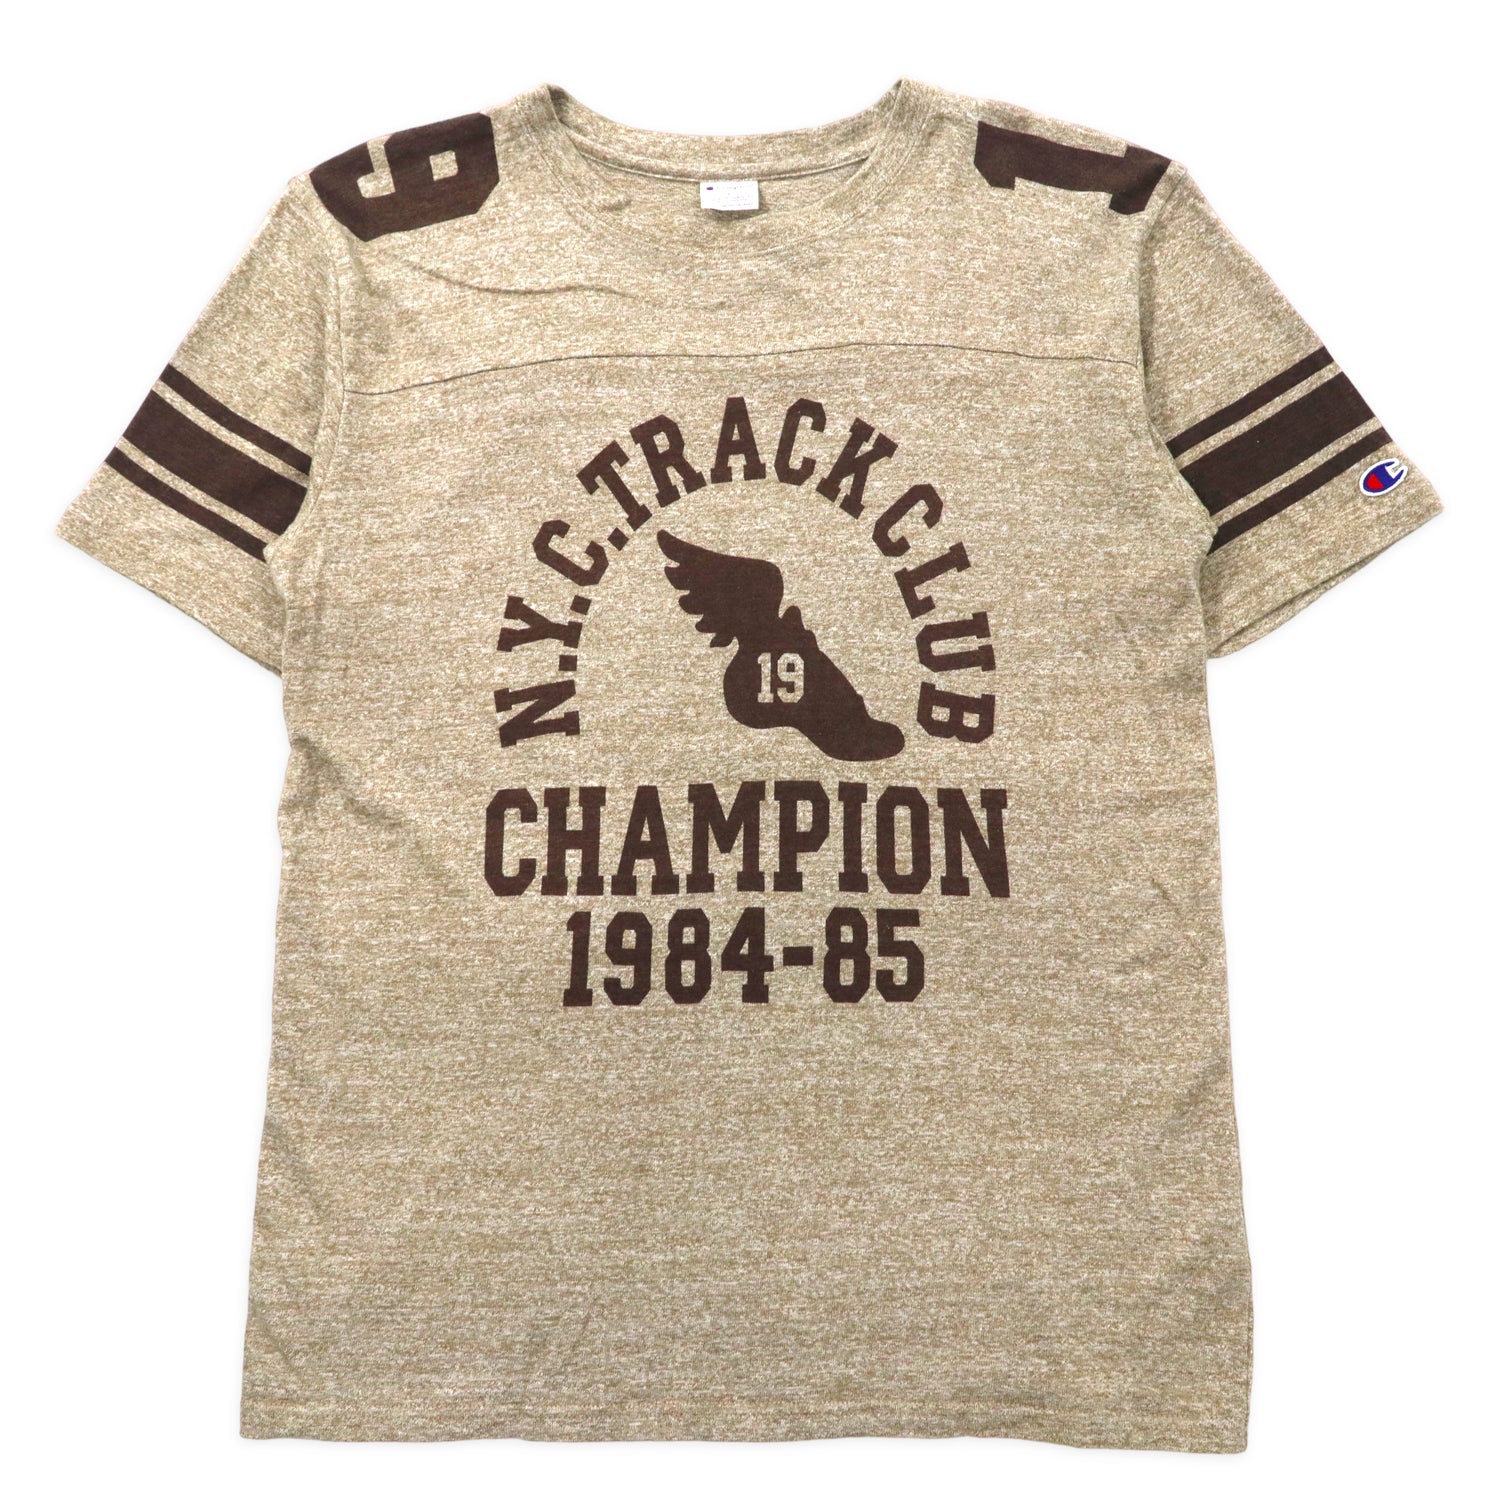 Champion Football T-shirt L Brown Cotton Deeped Print N.Y.C. Track